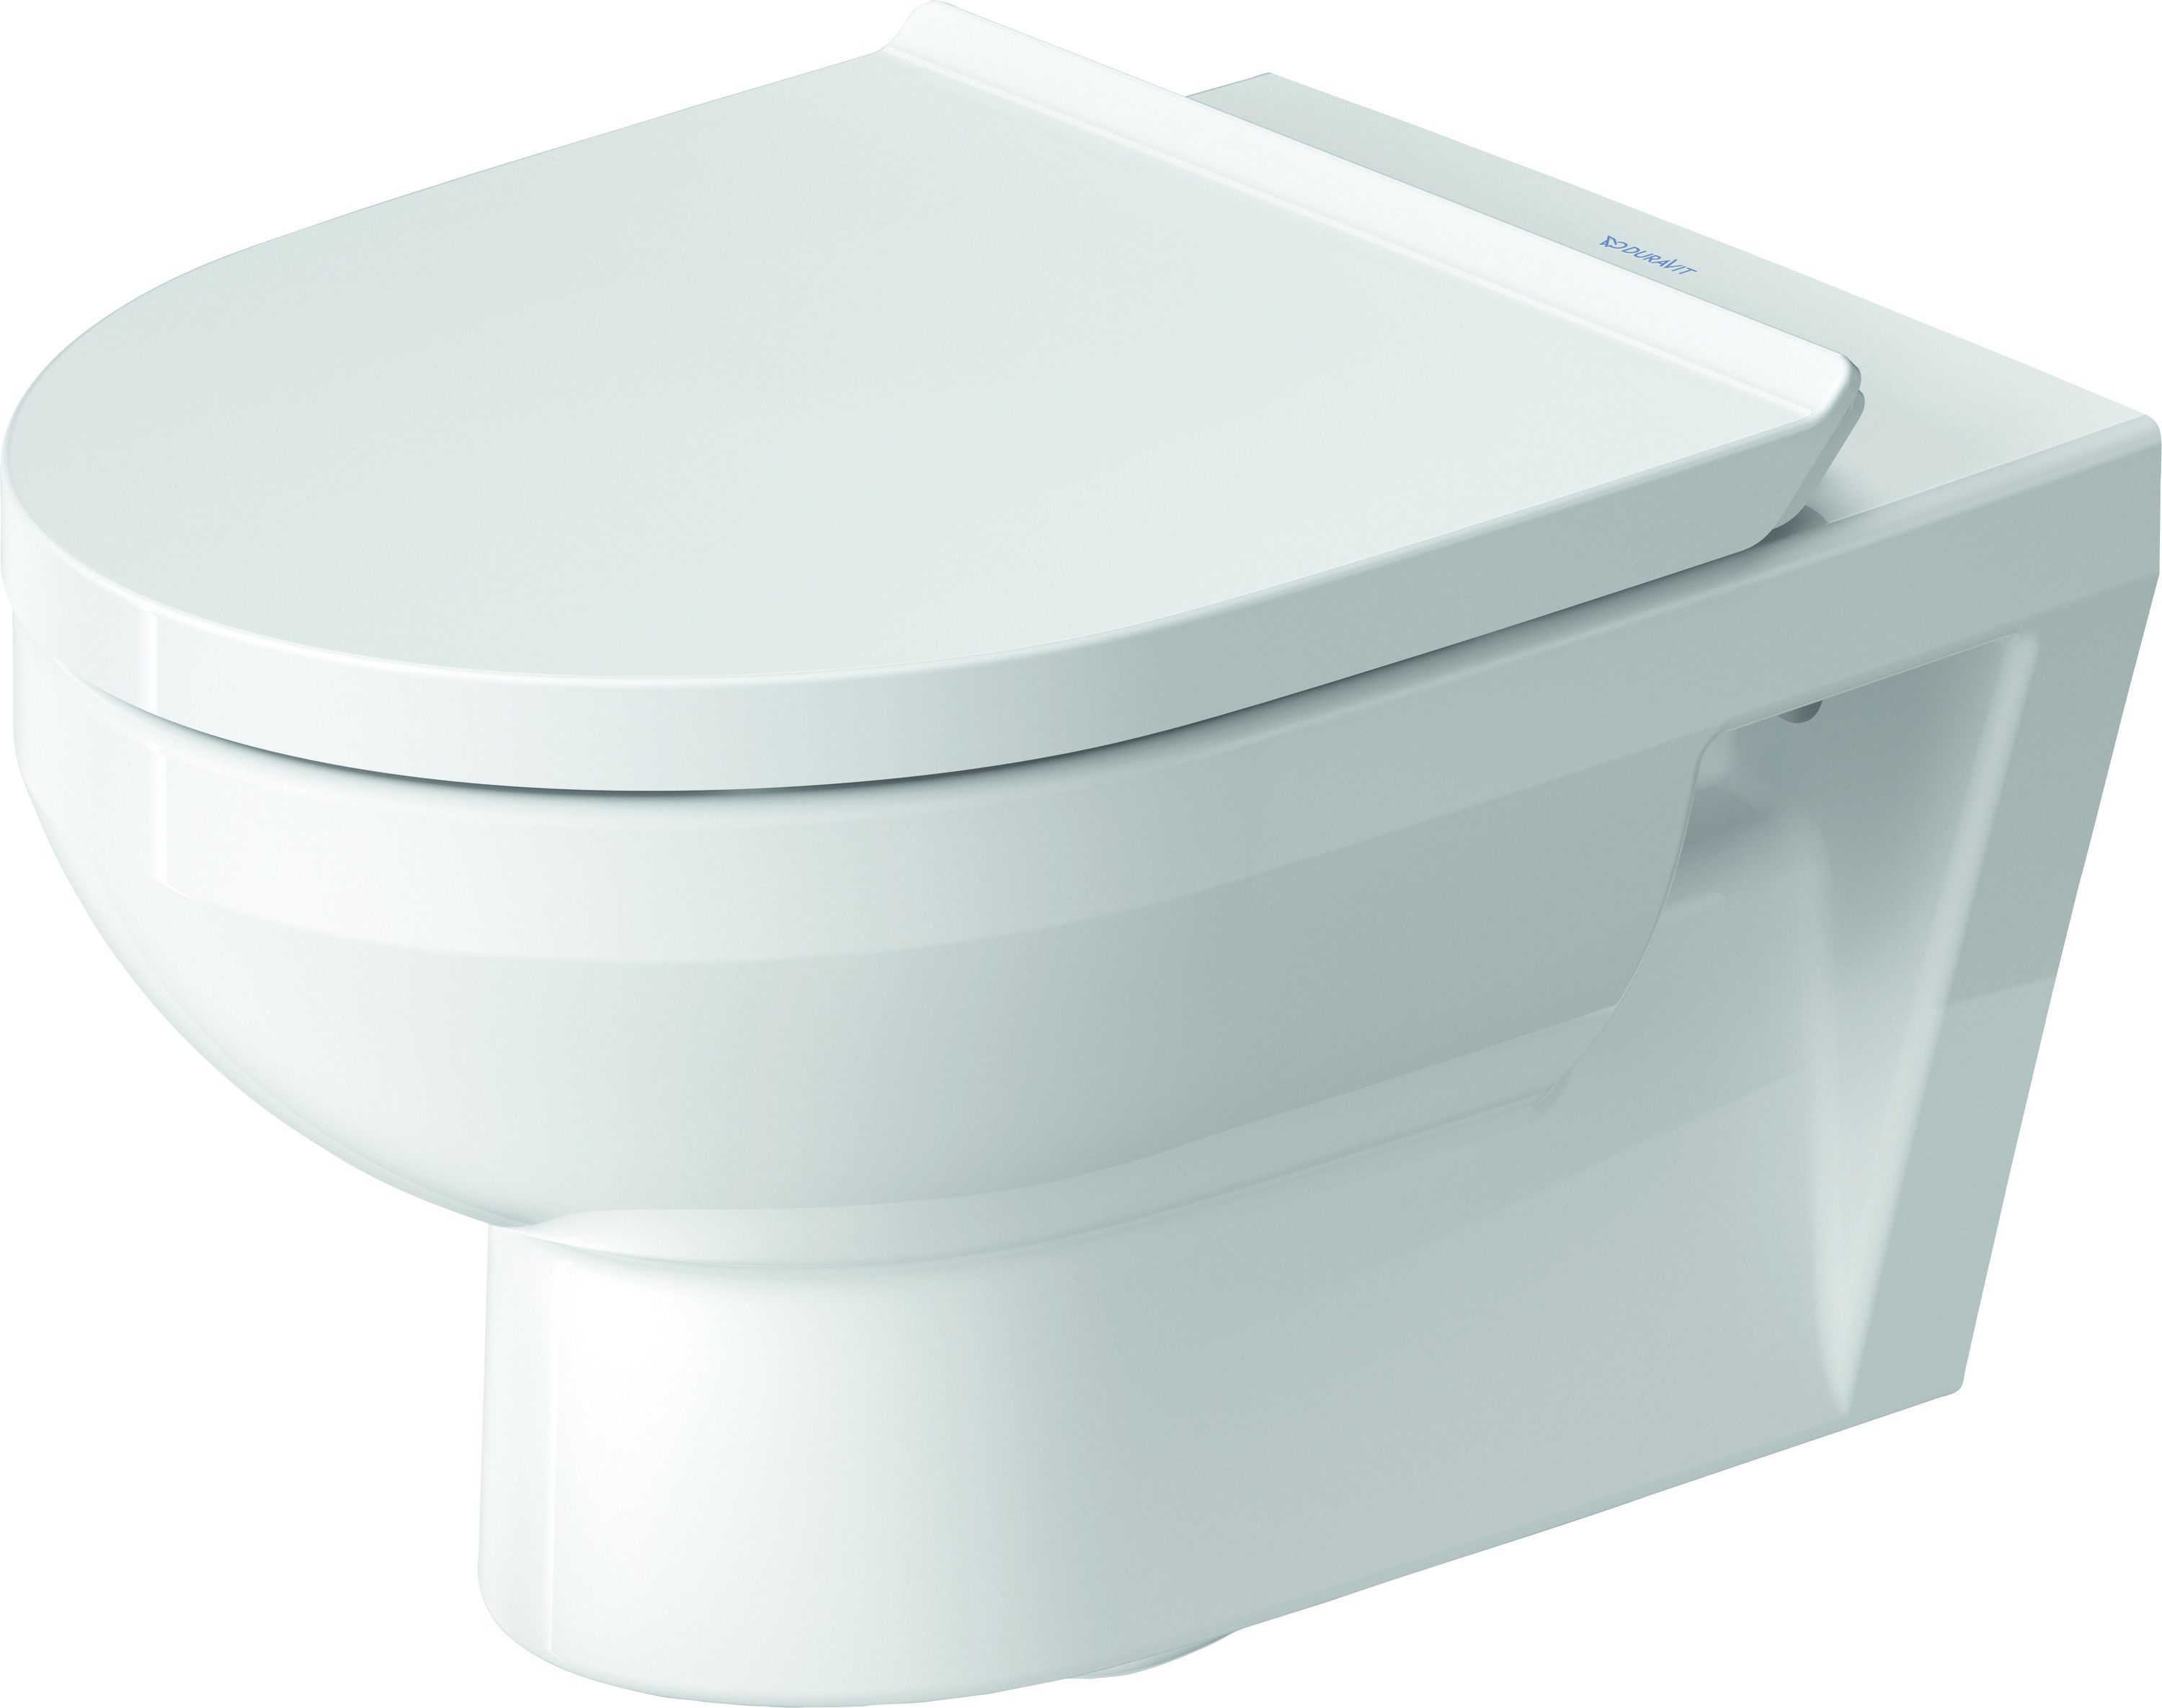 Wand-WC No.1 540 mm Tiefspüler, rimless, weiß, HYG